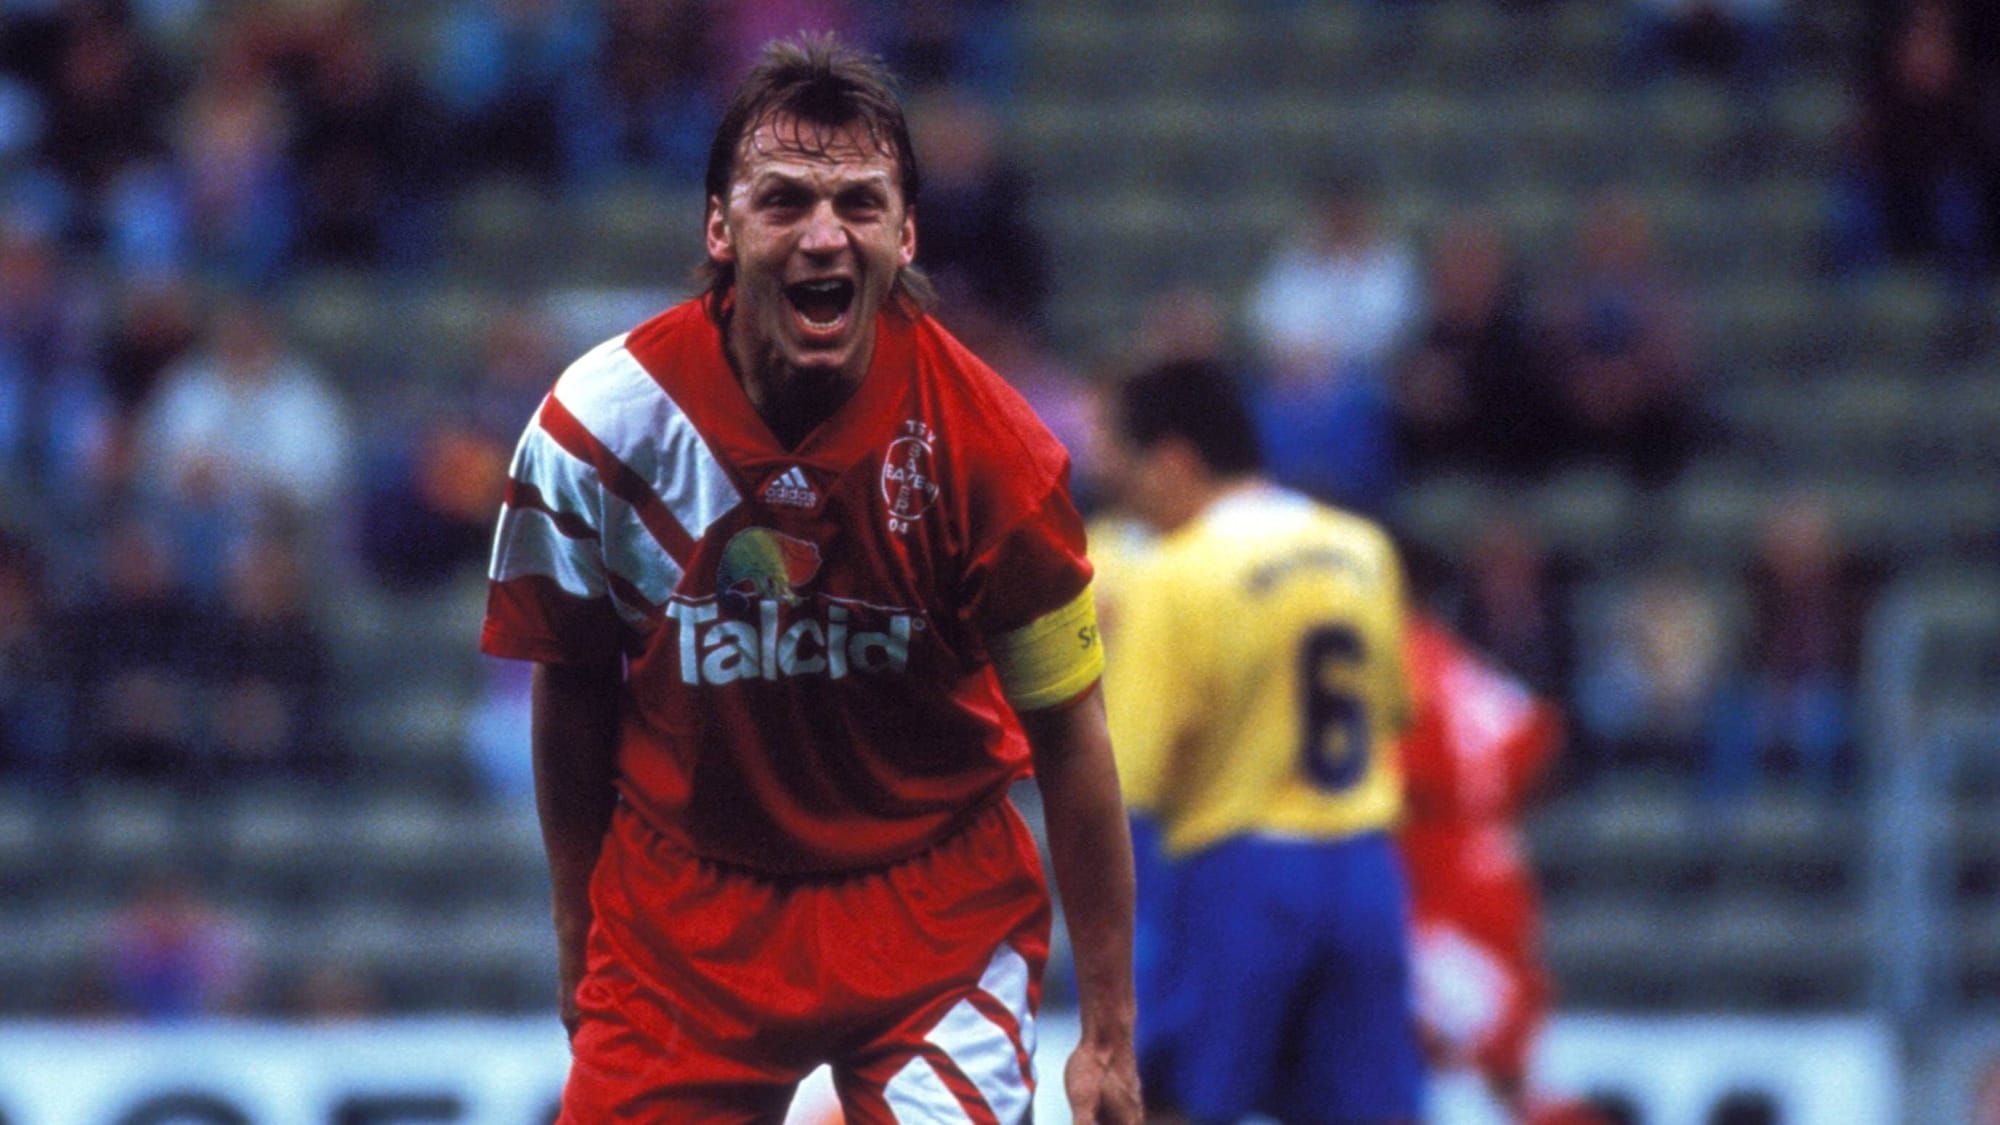 1992/93: Andreas Thom (Bayer 04 Leverkusen)